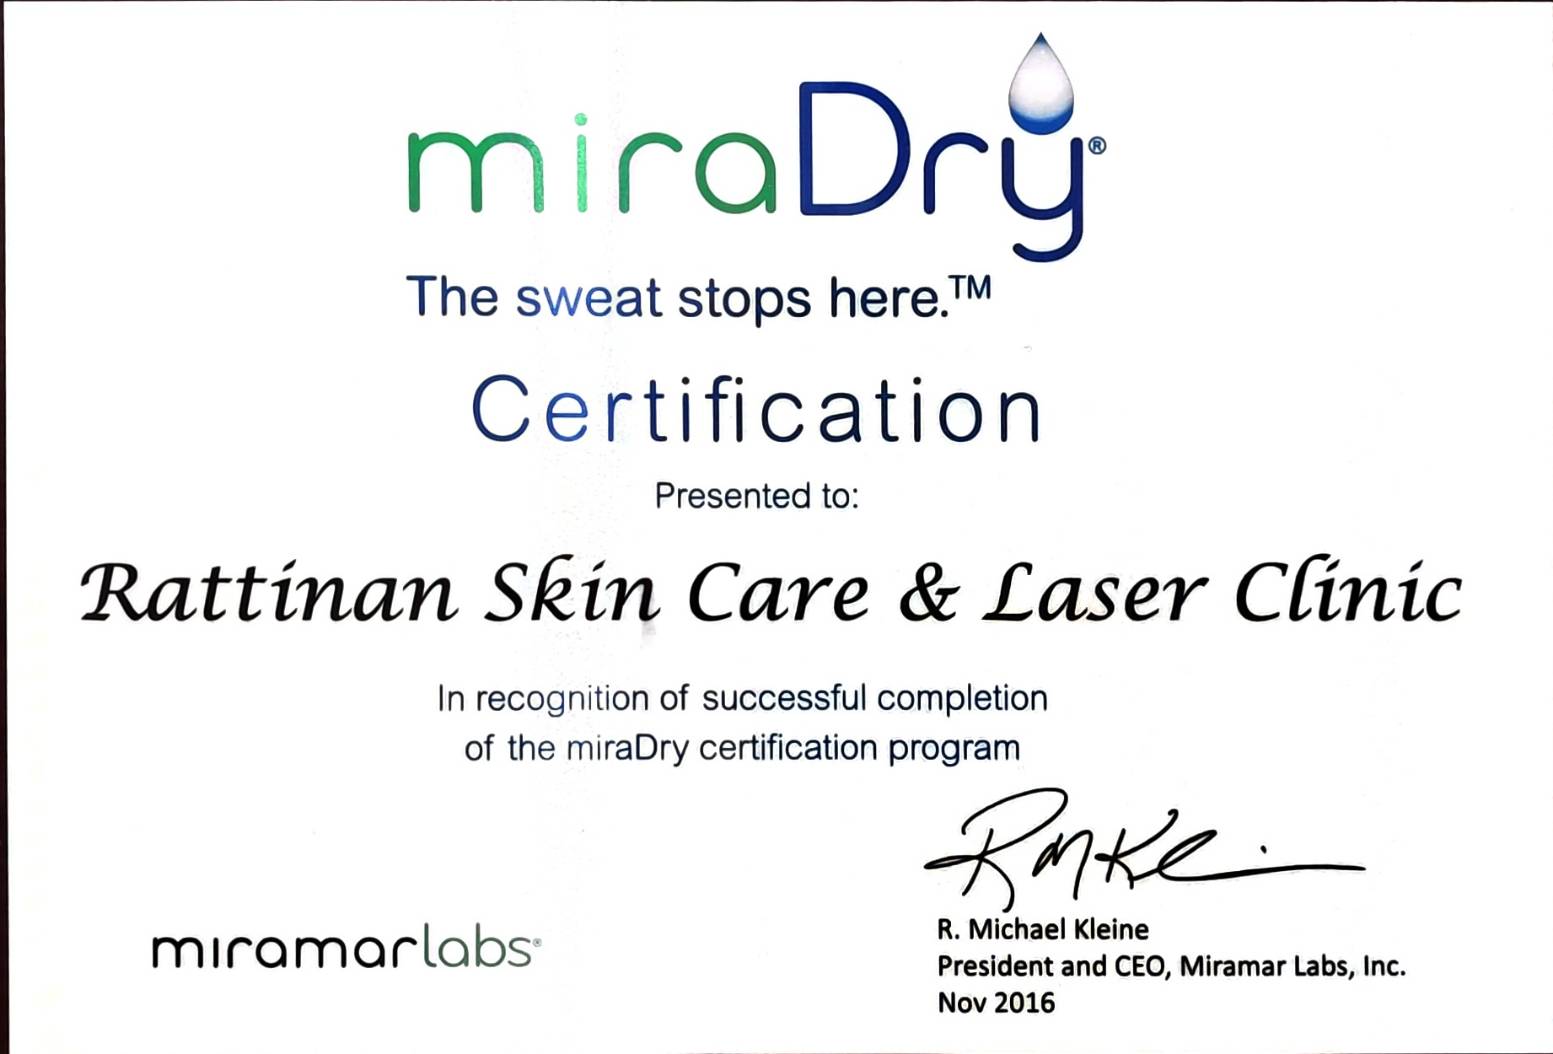 miradry certification